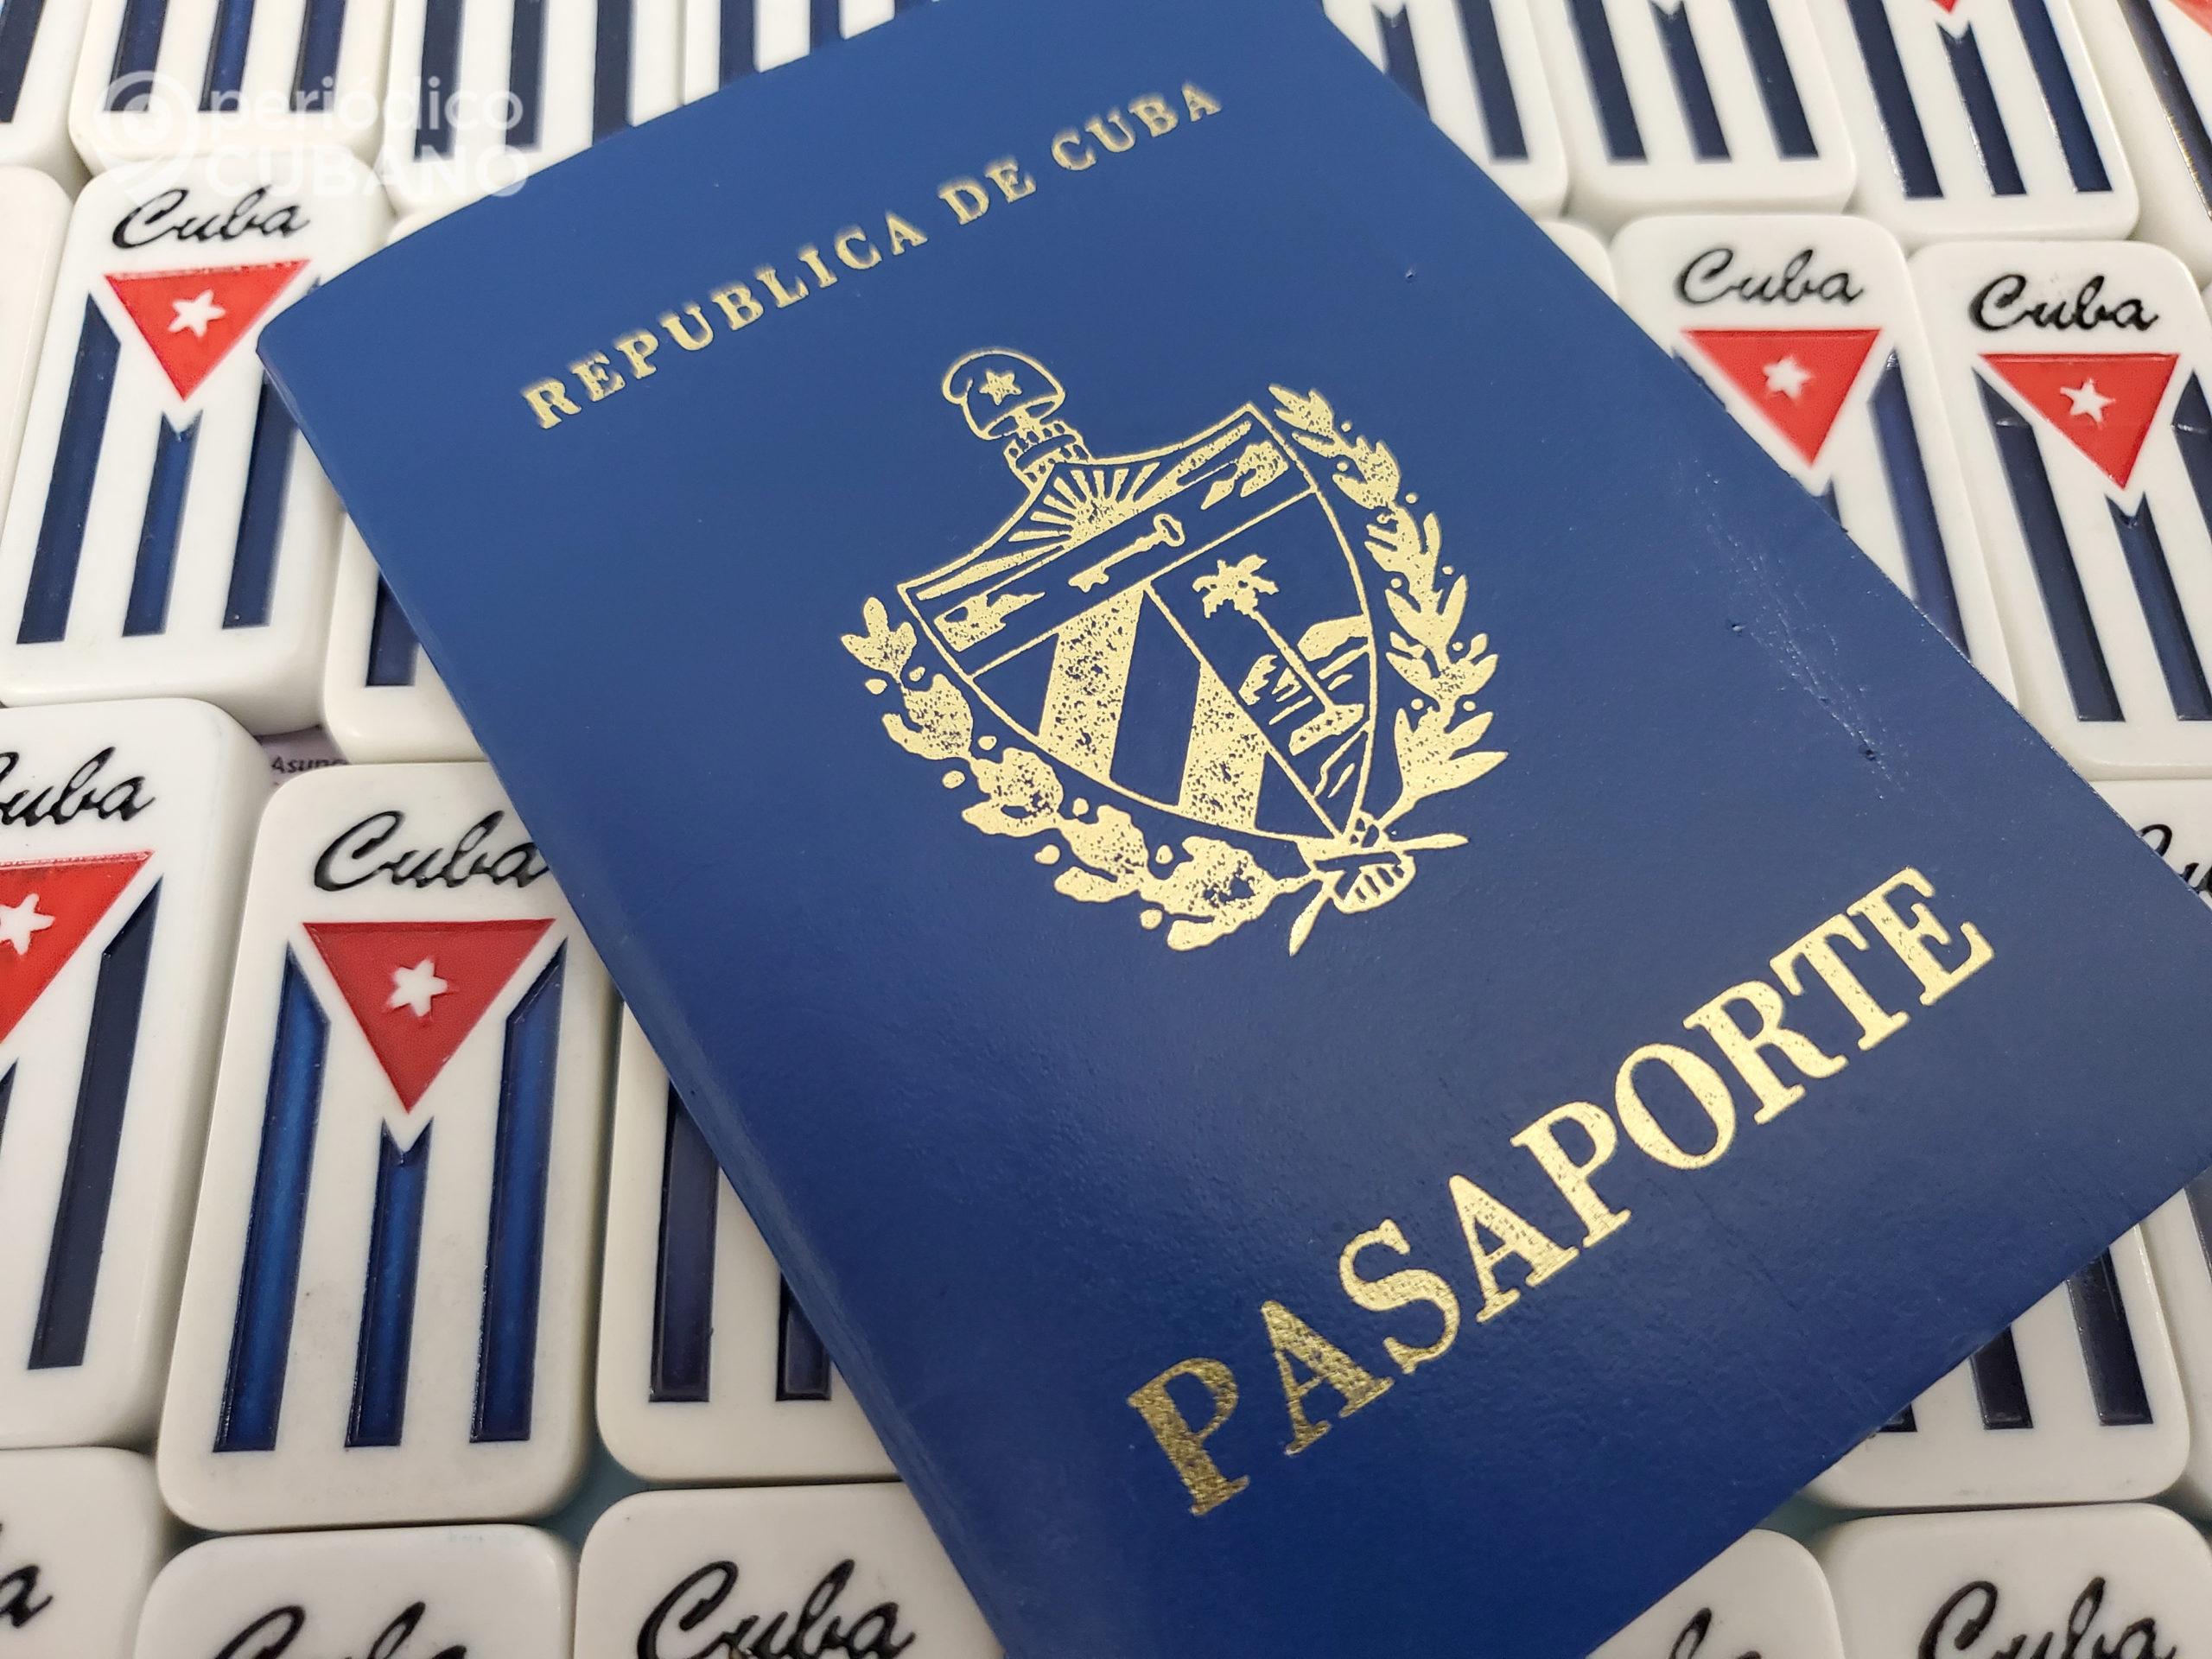 Costa Rica legaliza a migrantes cubanos que cumplan dos requisitos fundamentales